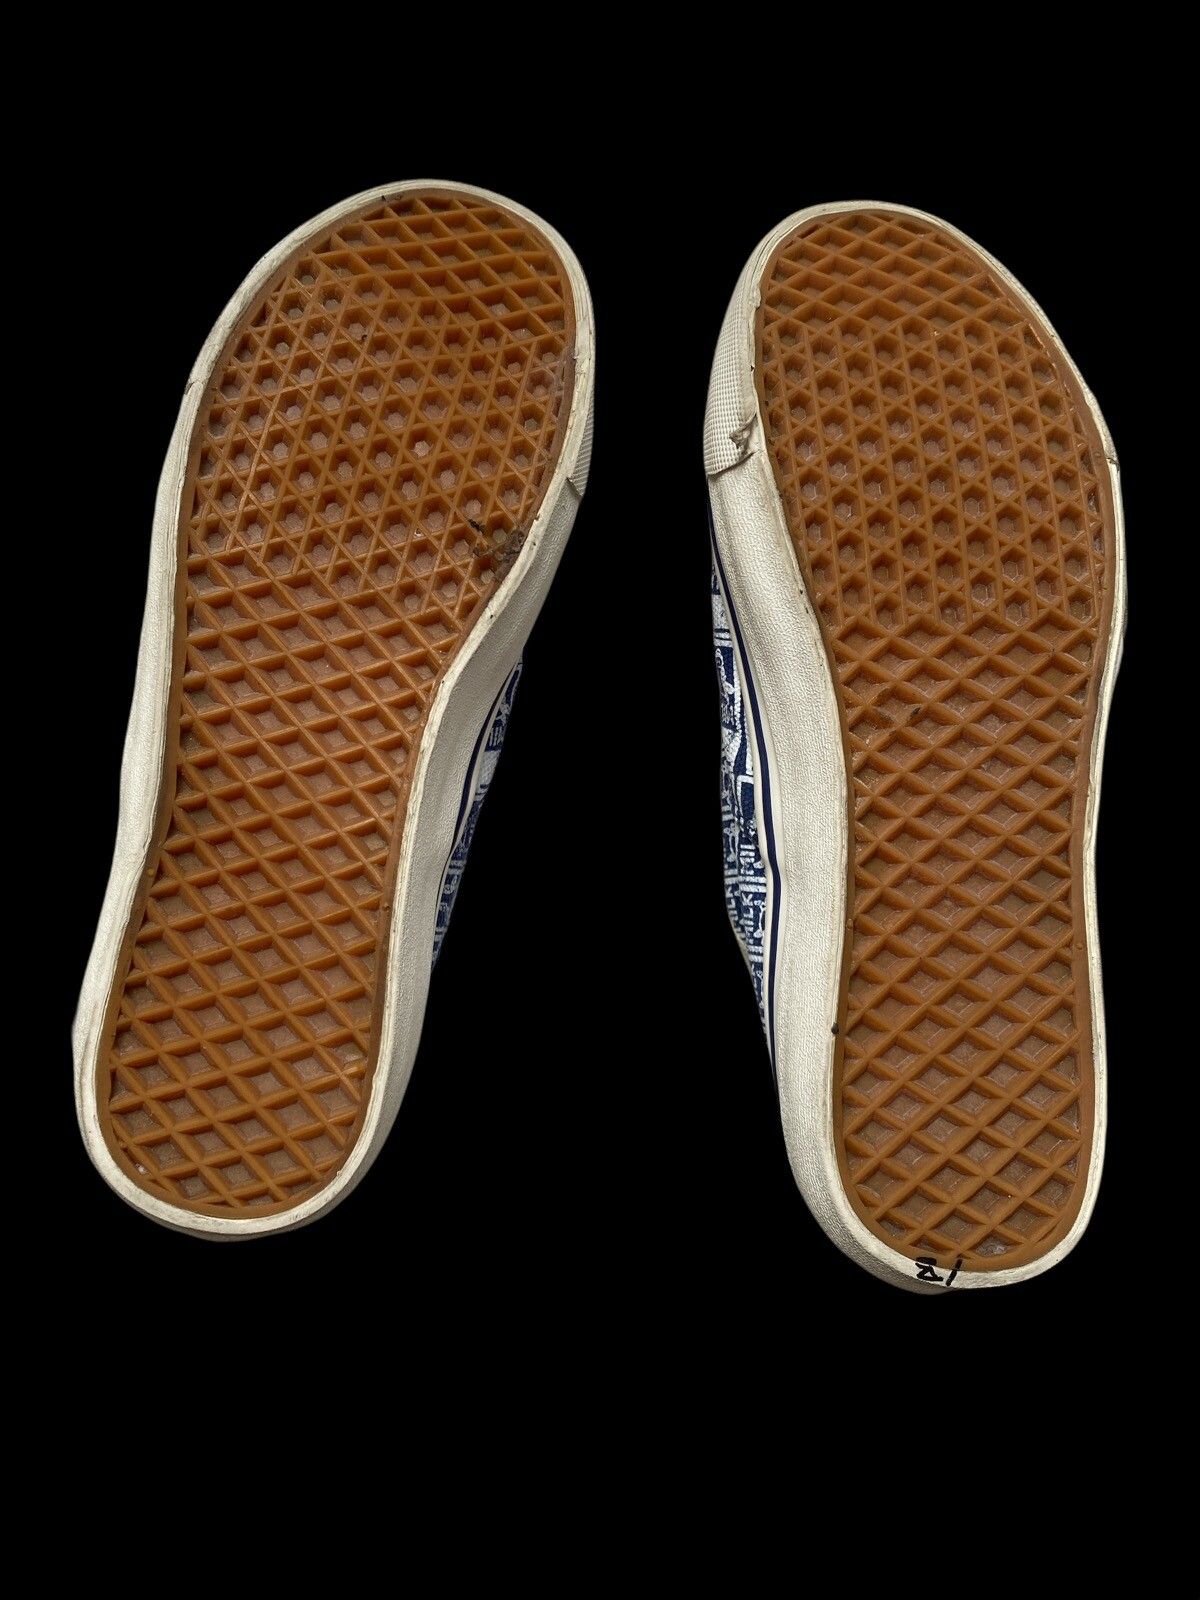 Issey Miyake NE-NET x MILK Sneakers Shoes Size US 8 / EU 41 - 8 Thumbnail